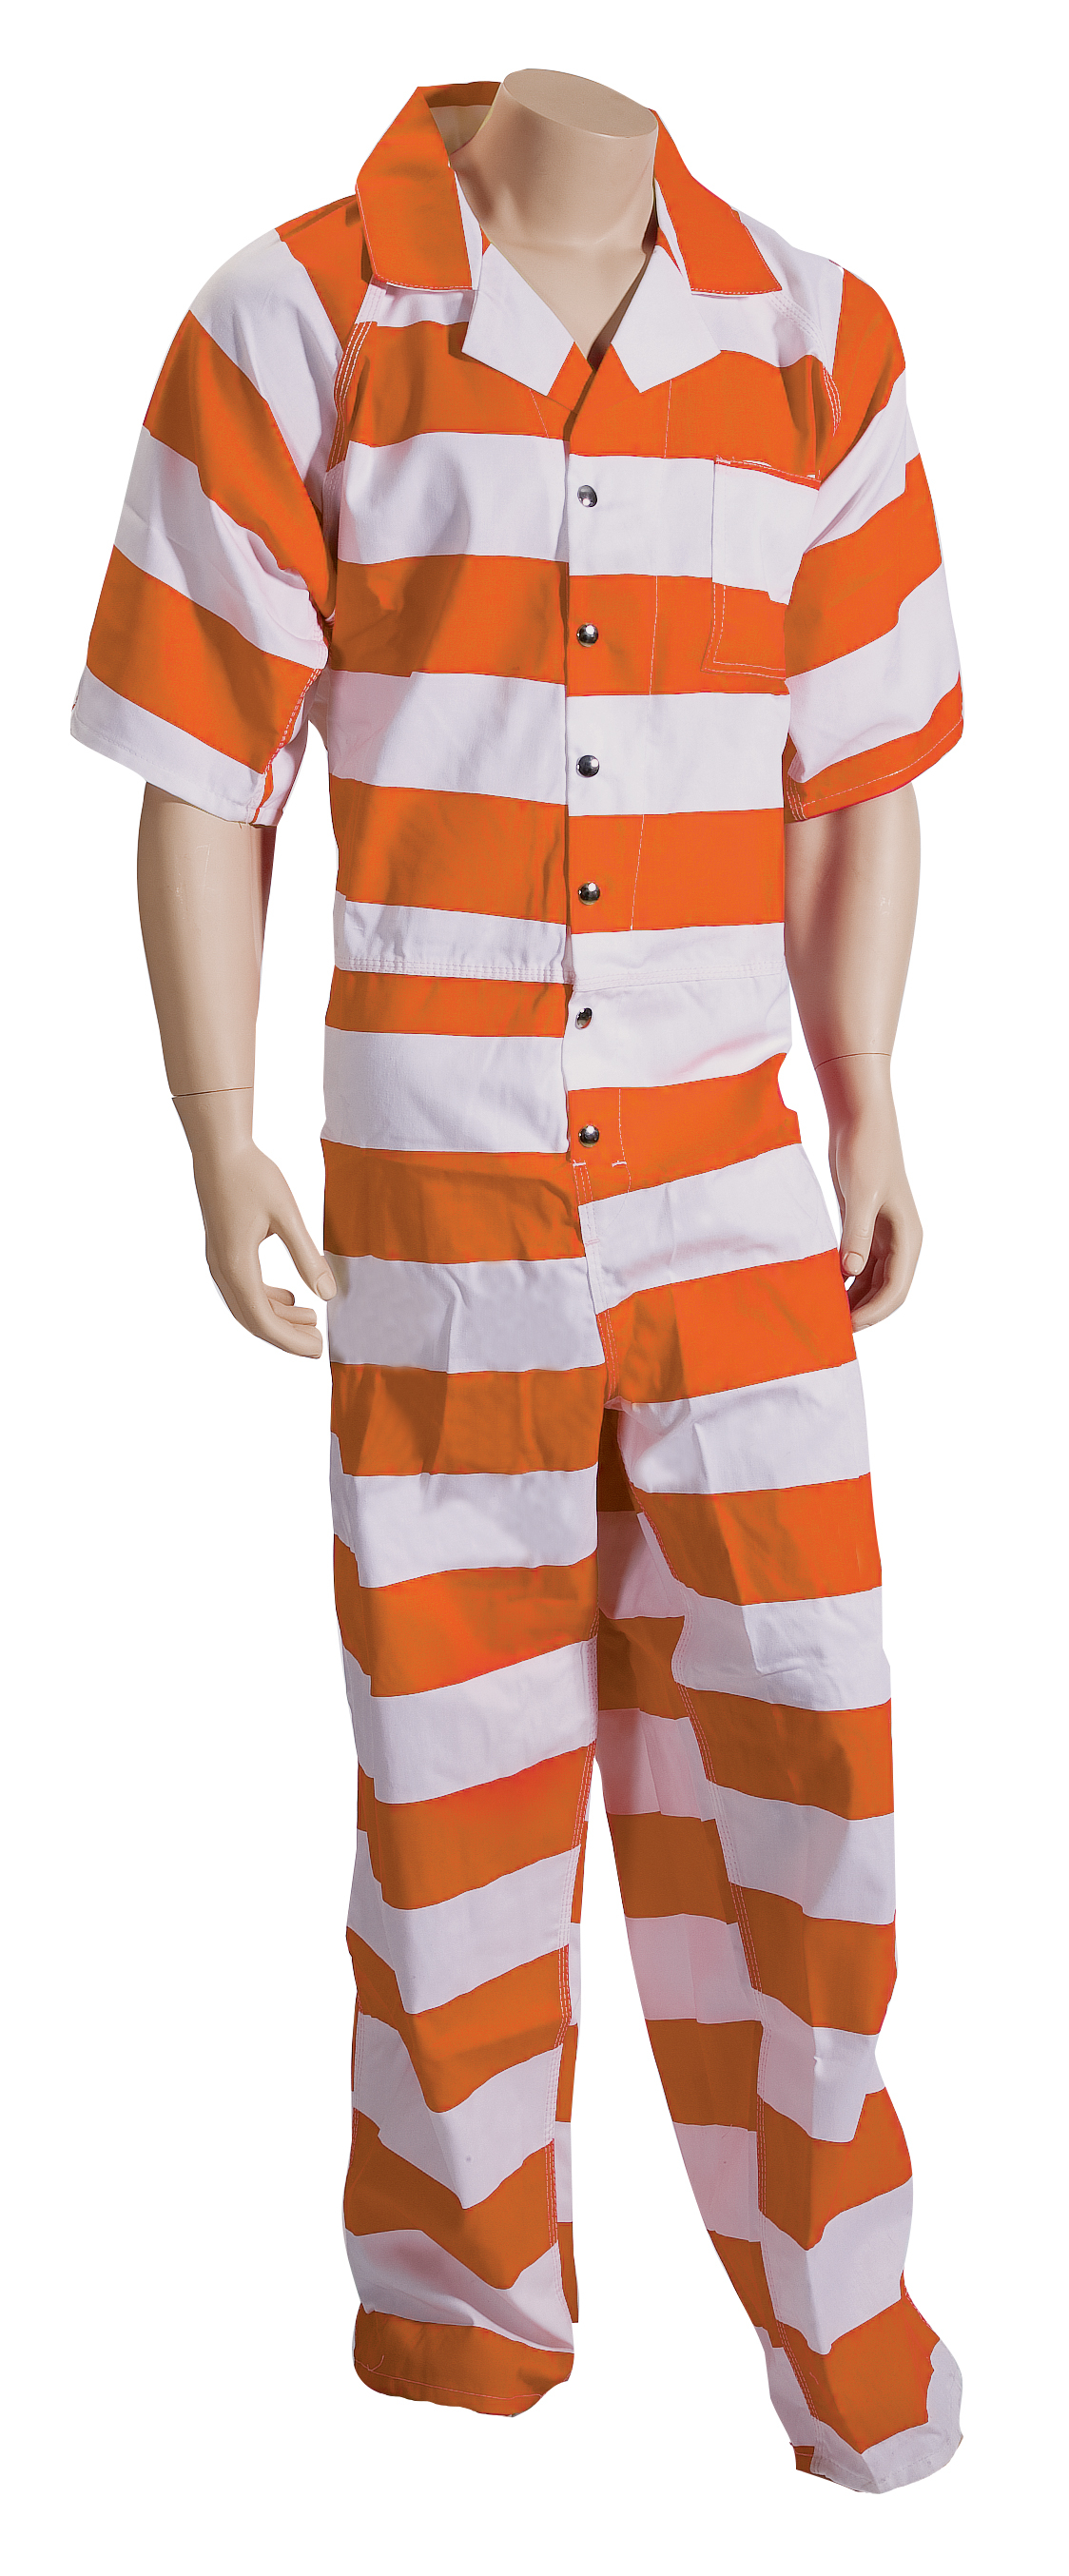 Inmate Uniforms